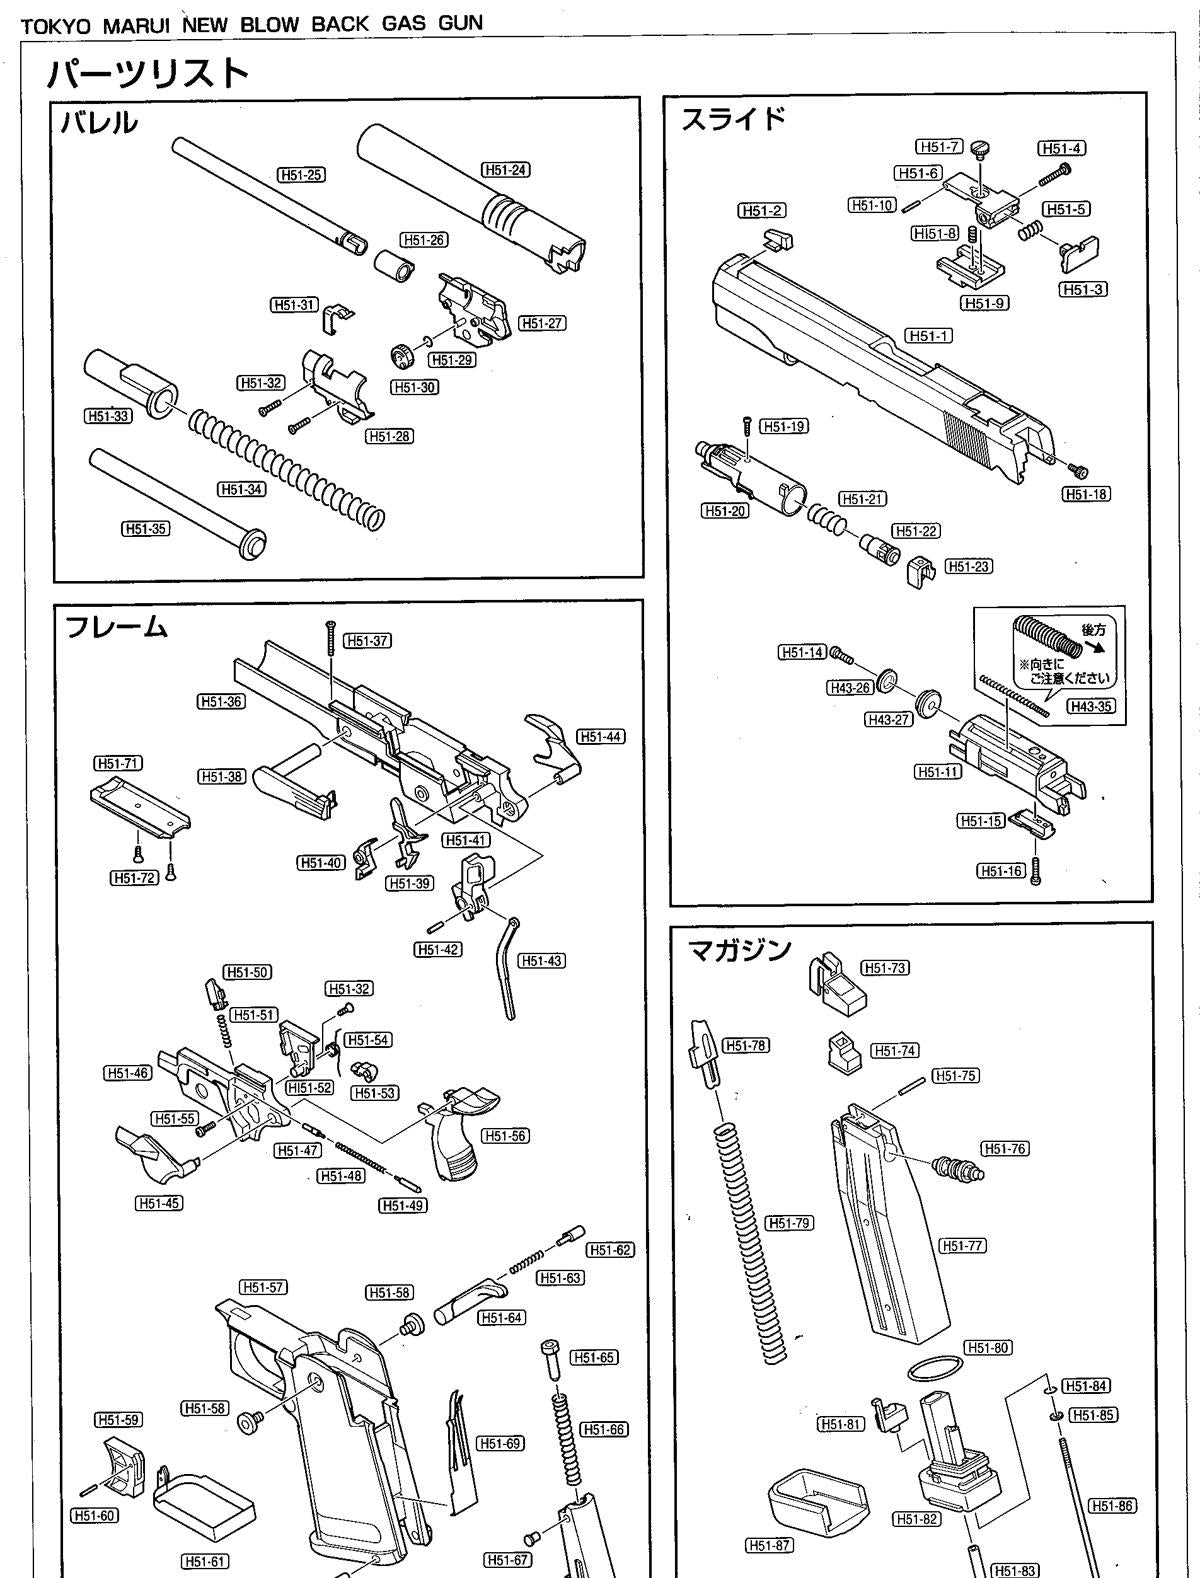 Tokyo Marui Hi-Capa - Part H51-34 - recoil spring - Ebog Designs